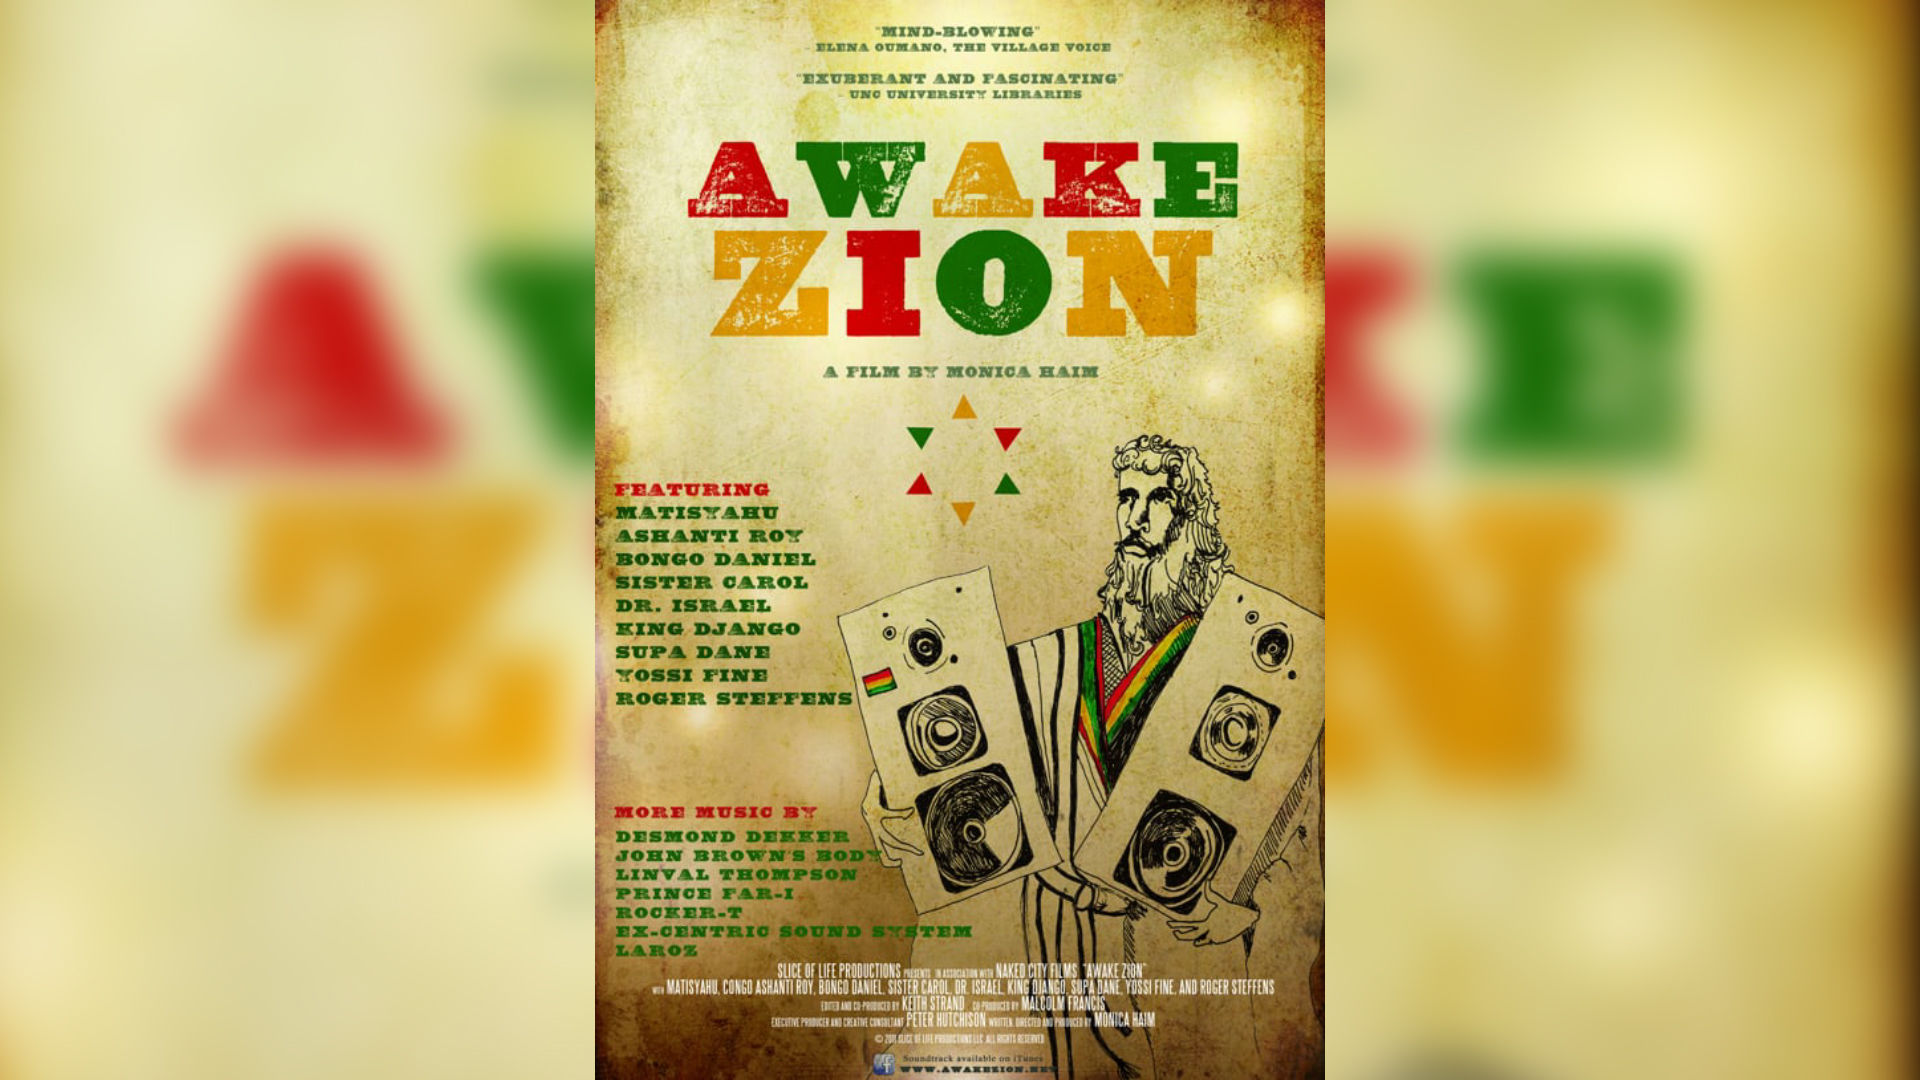 AWAKE ZION: A Feature Doc Exploring the Links Between Rasta, Reggae & Judaism (2005)